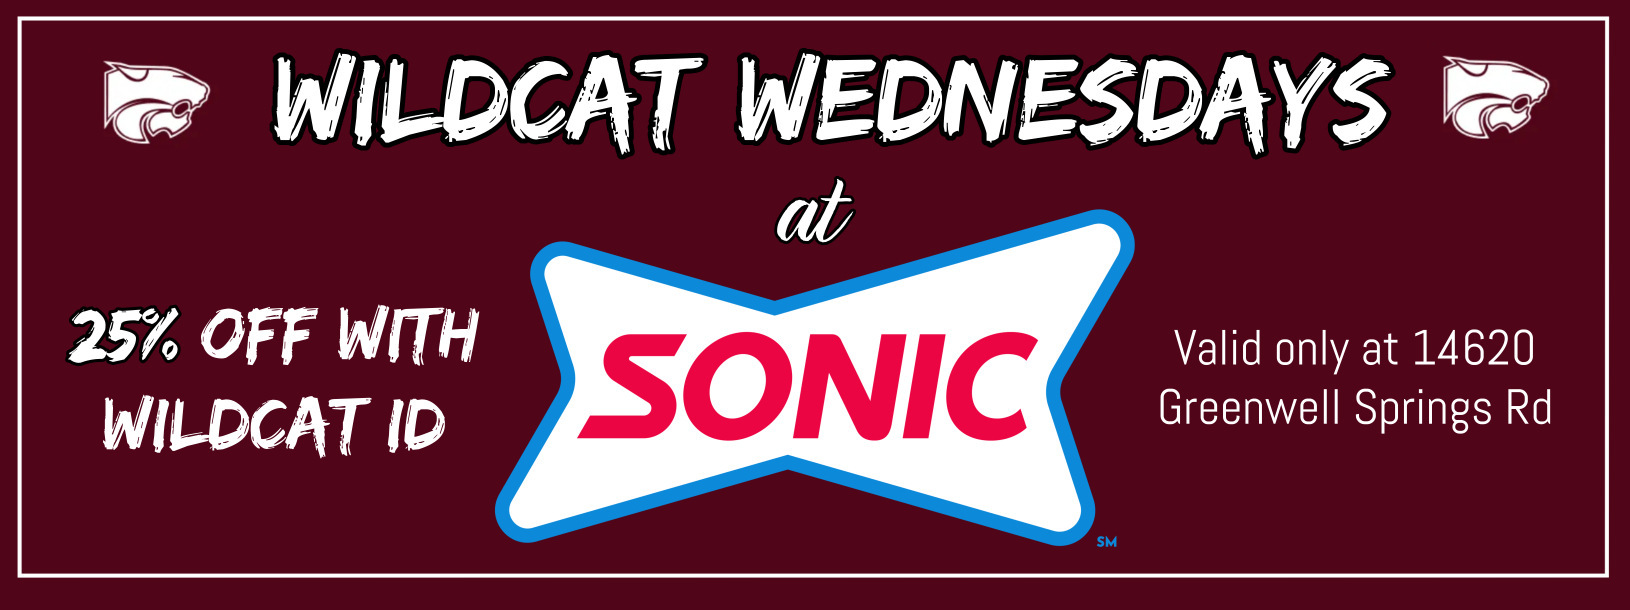 Wildcat Wednesday's Sonic